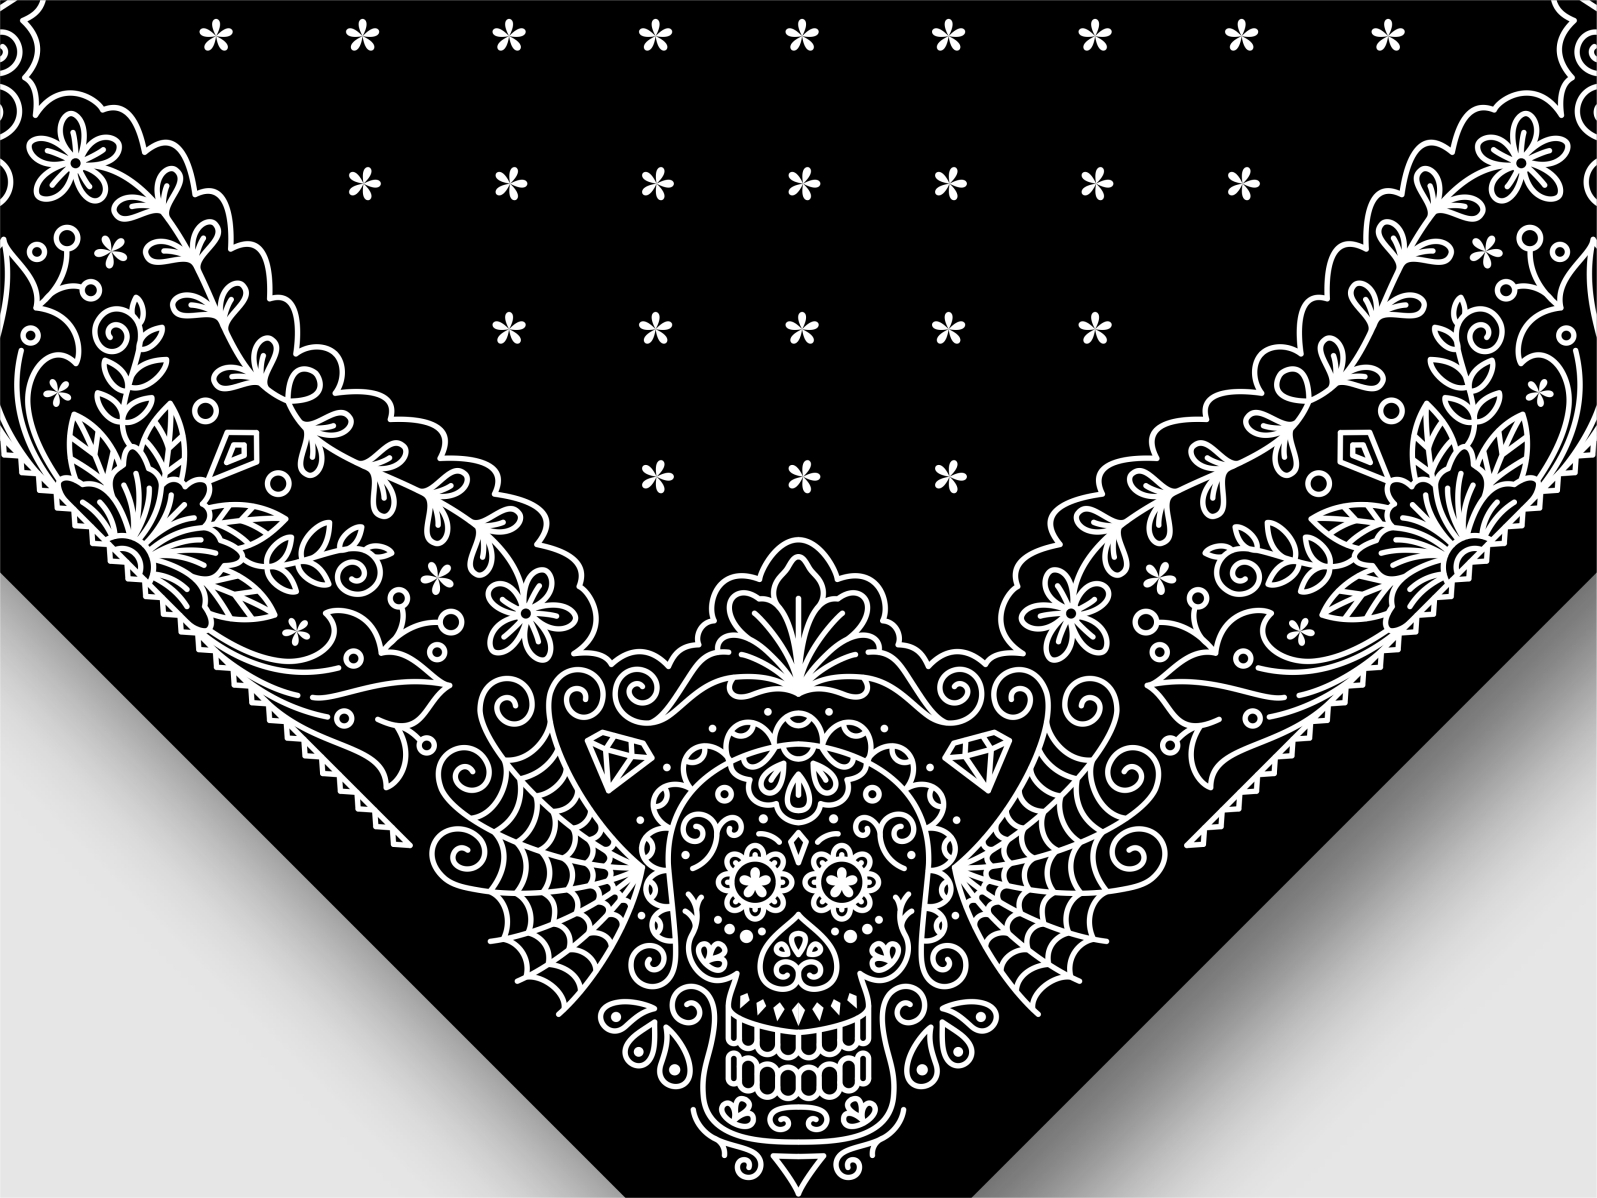 Bandana paisley pattern ornament with mexican skull tattoo by Bandanations  by IrdatPurwadi on Dribbble